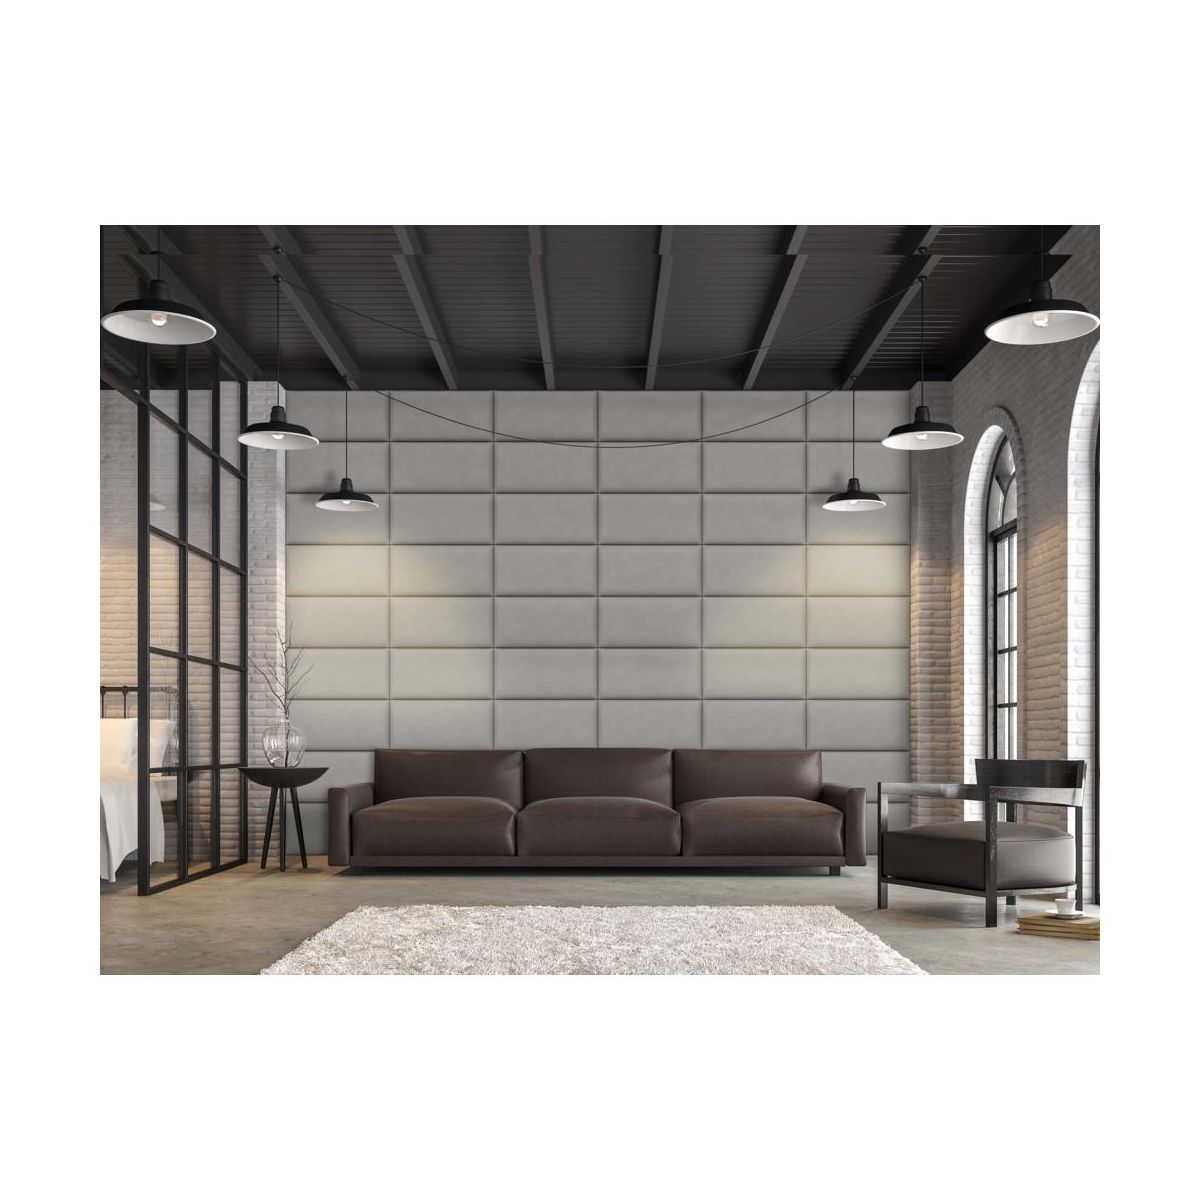 Upholstered 3D Wall Panel 60 x 30 cm - Upholstered 3D Wall Panels - DecorMania.eu